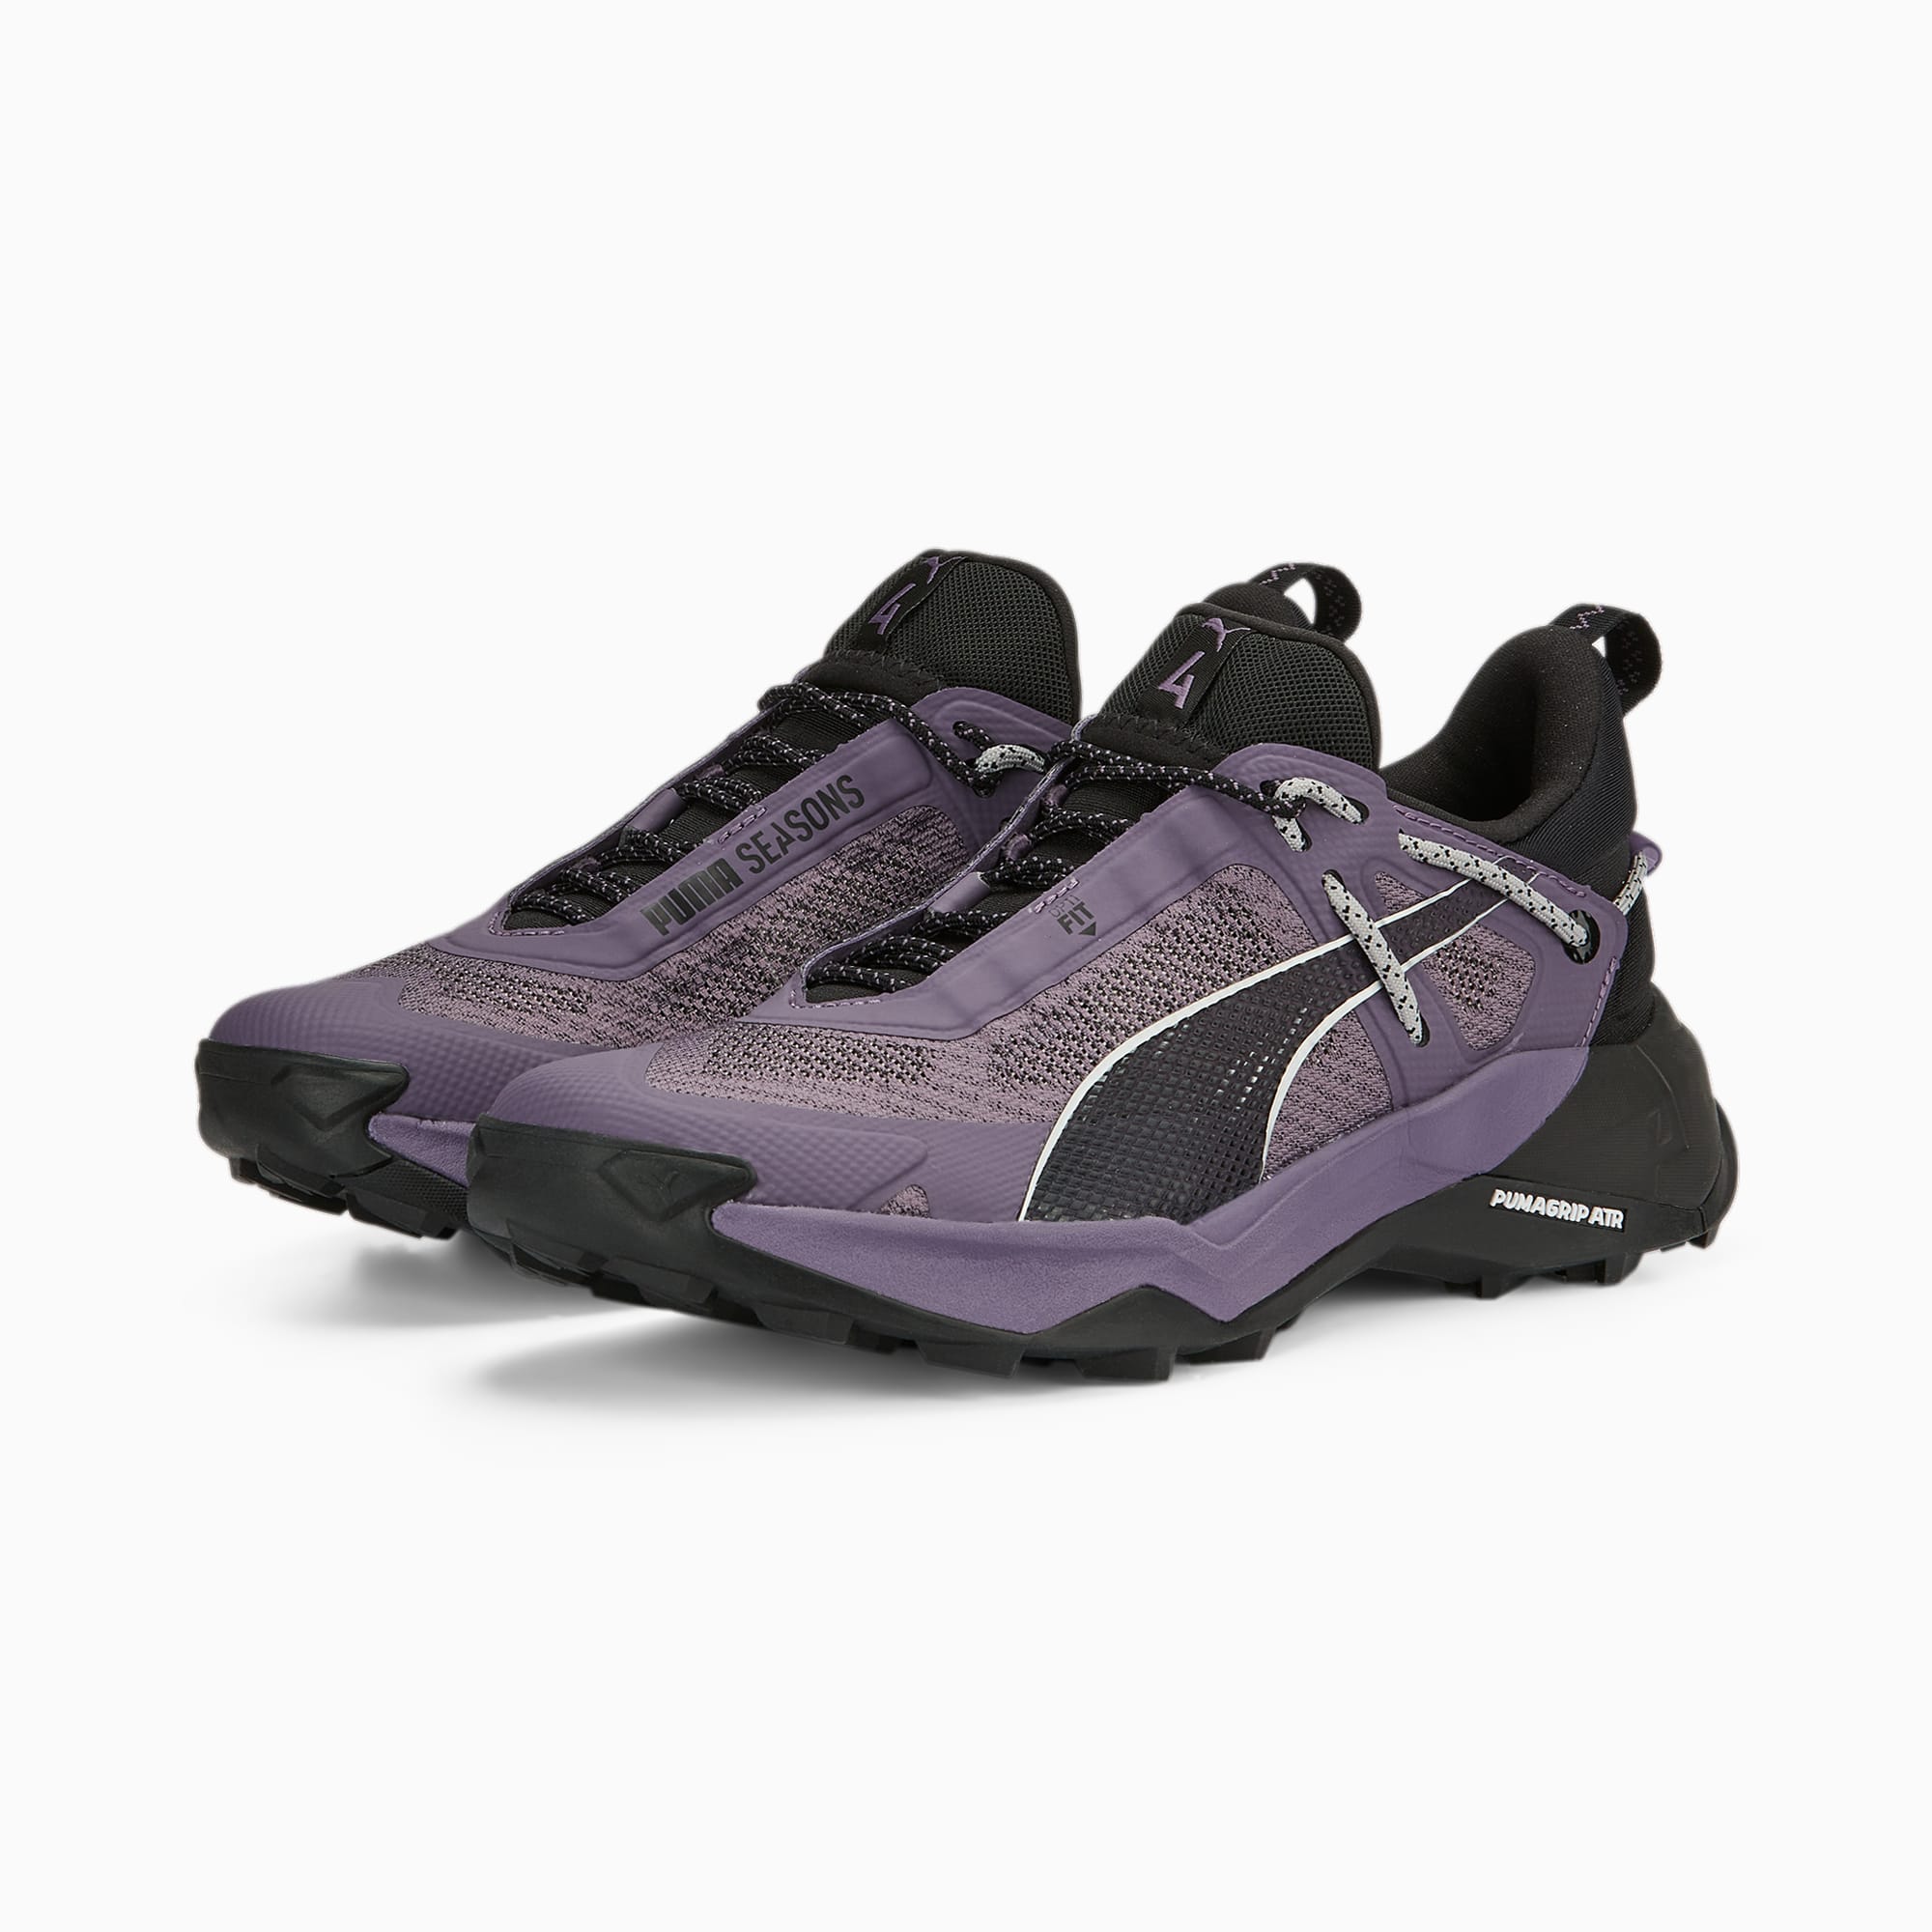 PUMA Explore Nitro™ Women's Hiking Shoes, Purple Charcoal/Black/Silver